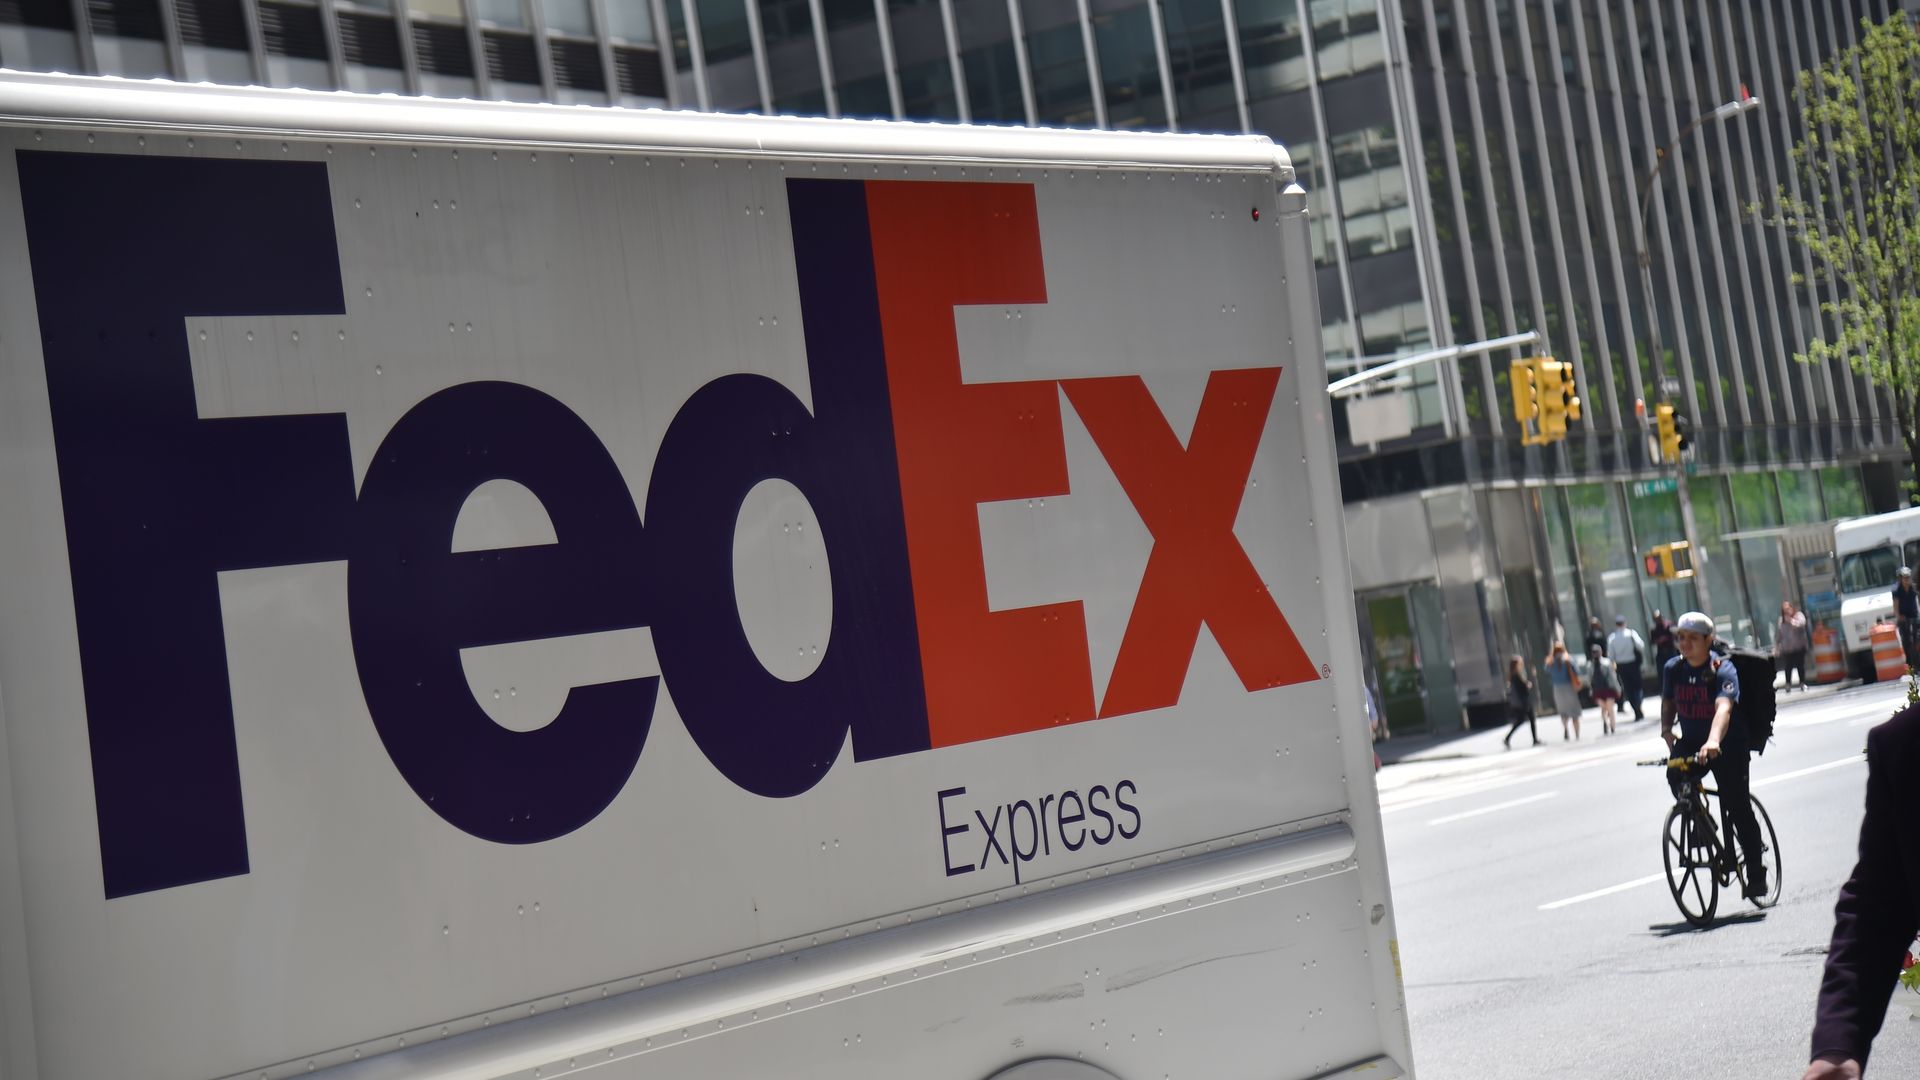 FEdEx truck on the street